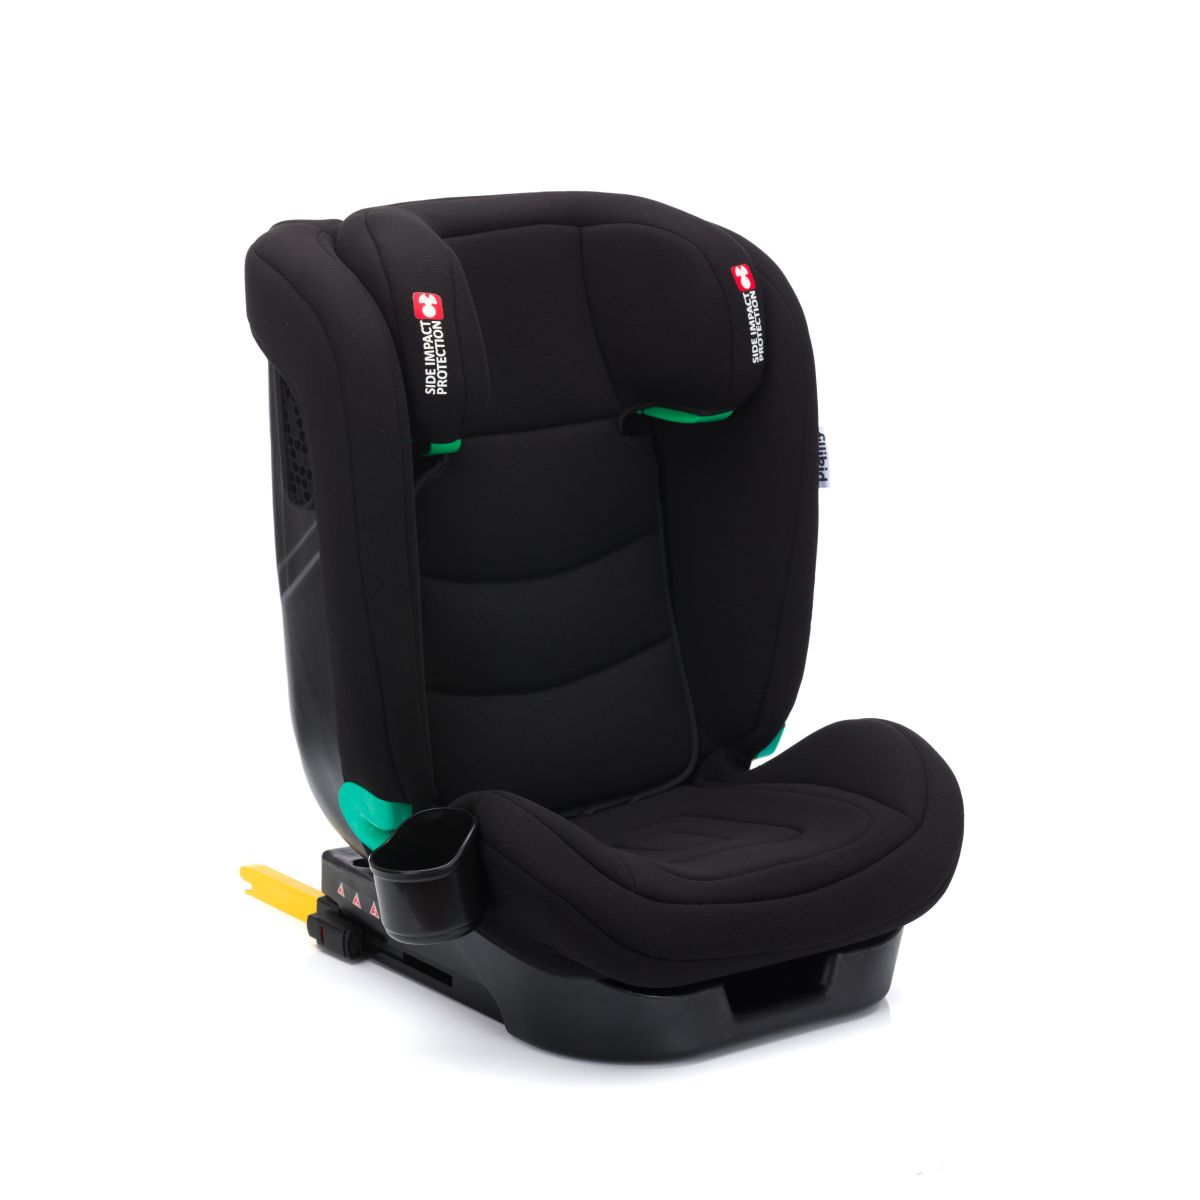 Fillikid - Auto-Kindersitz - Elli Pro - grau/grün - Isofix - i